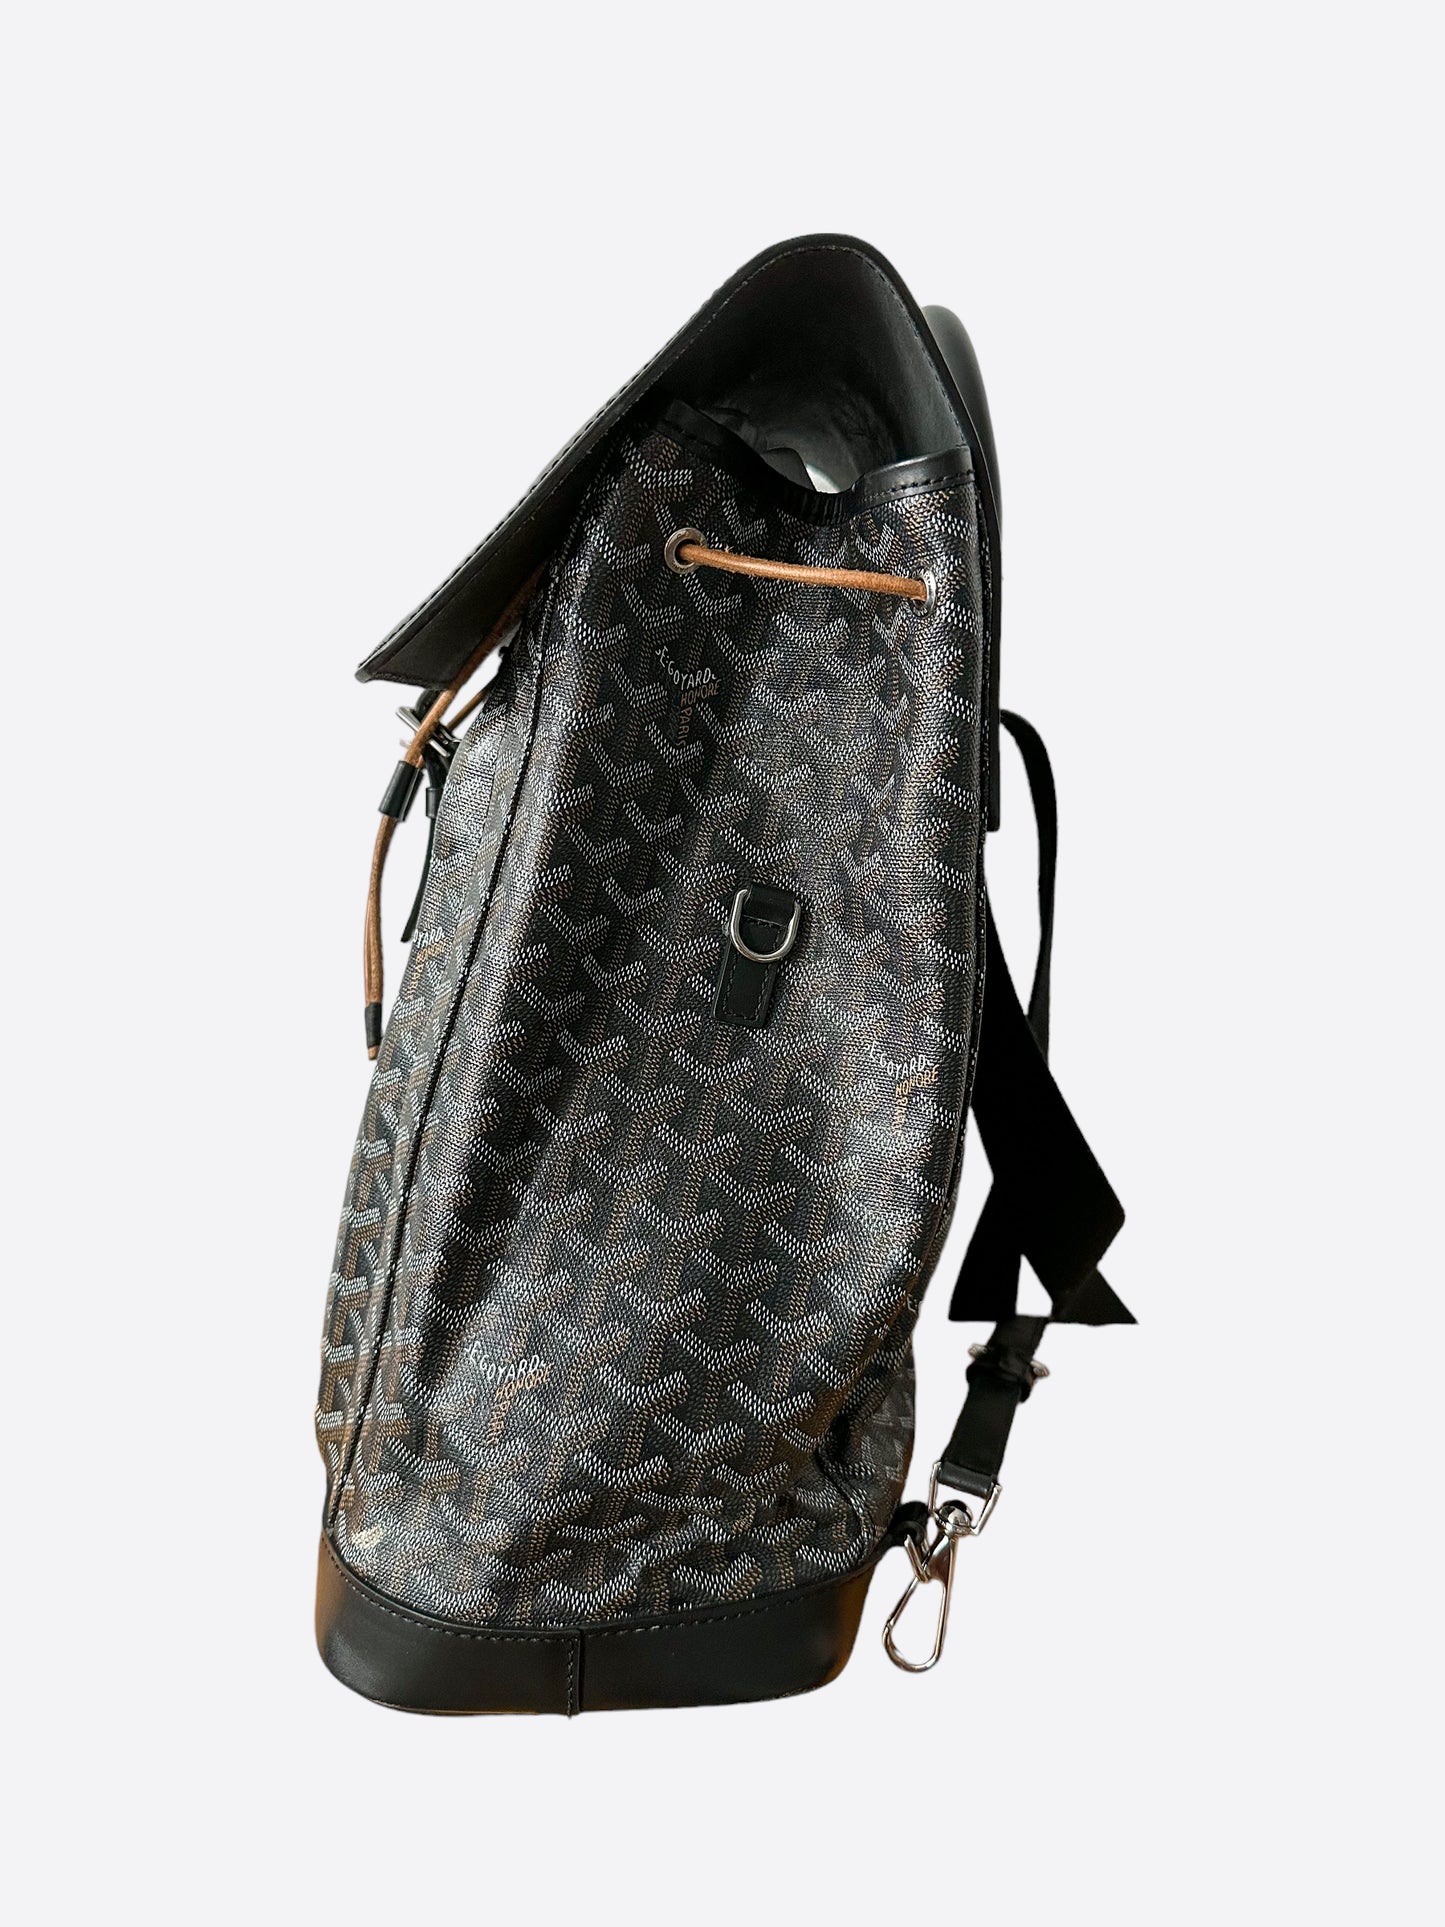 Shop GOYARD Alpin MM Backpack by mimiparfait